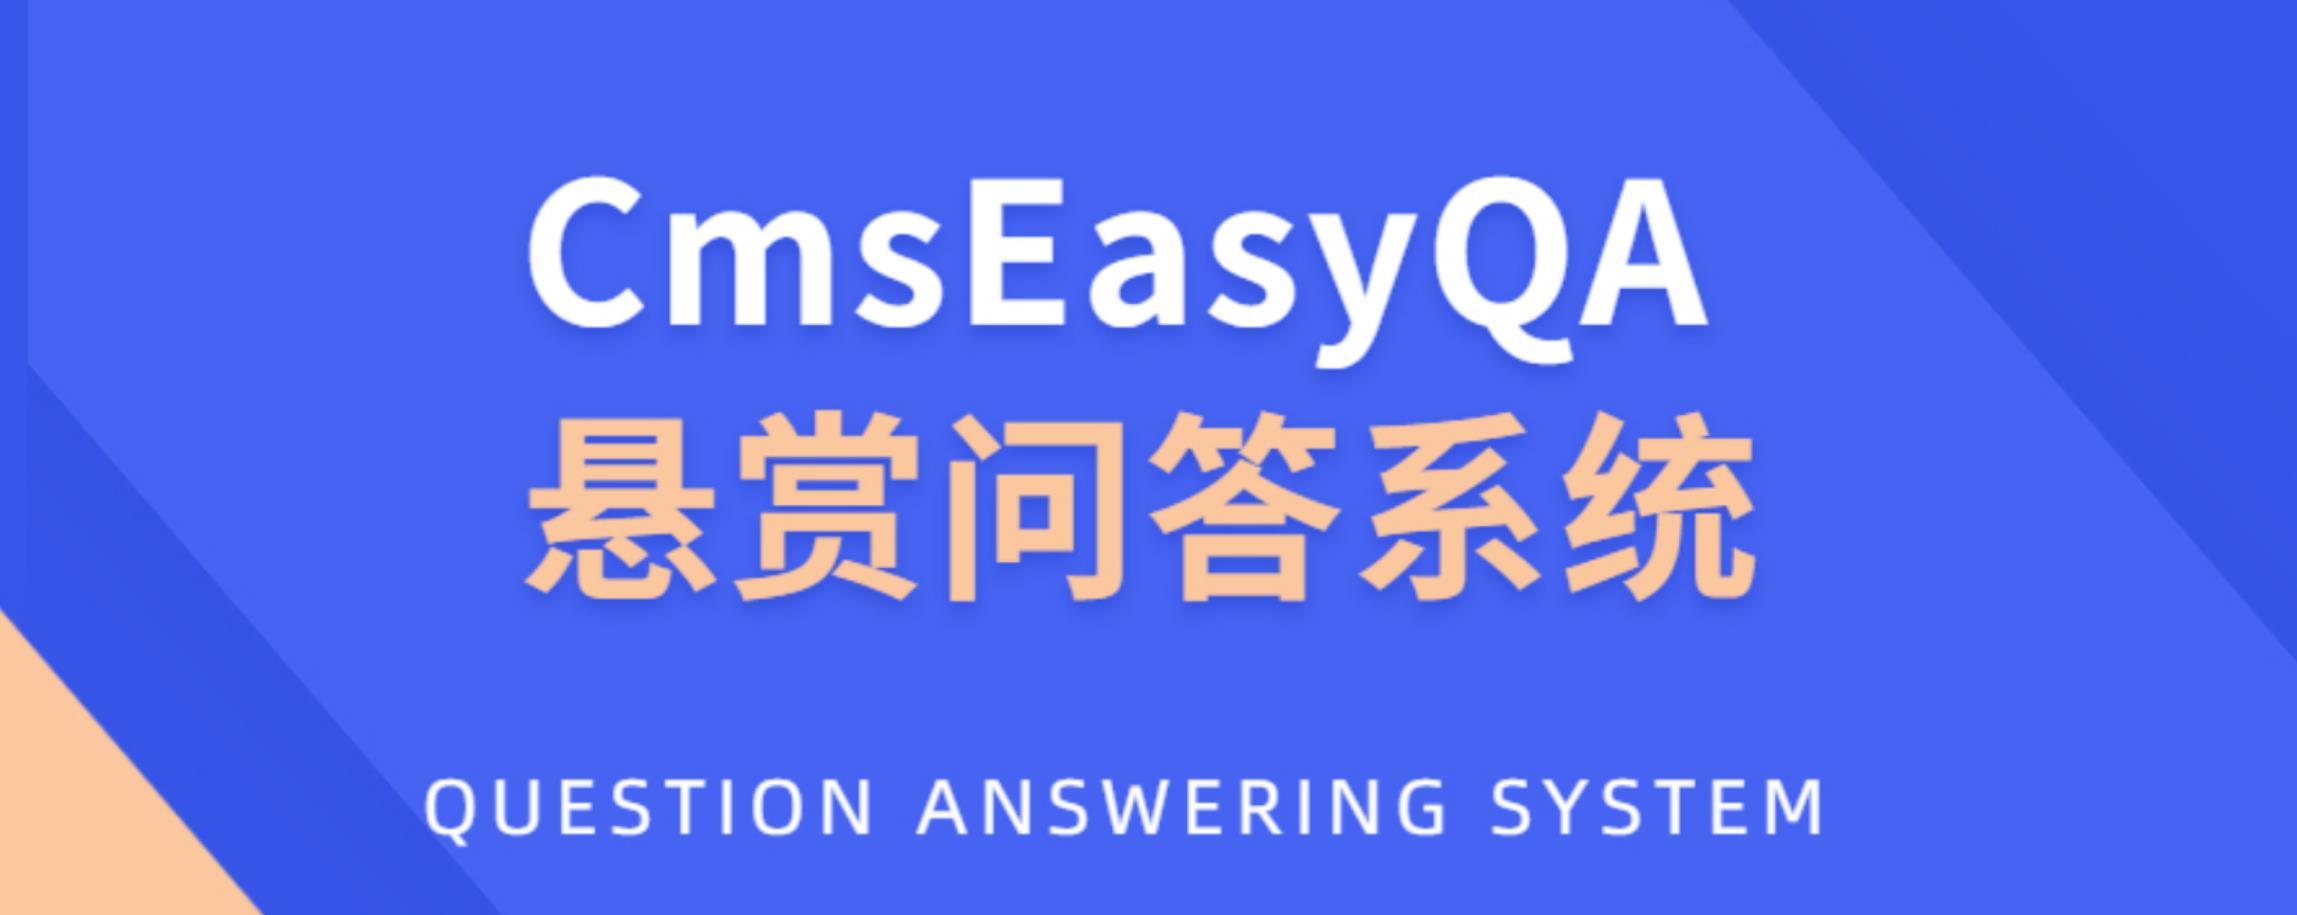 最新CmsEasyQA悬赏问答系统PHP源码分享